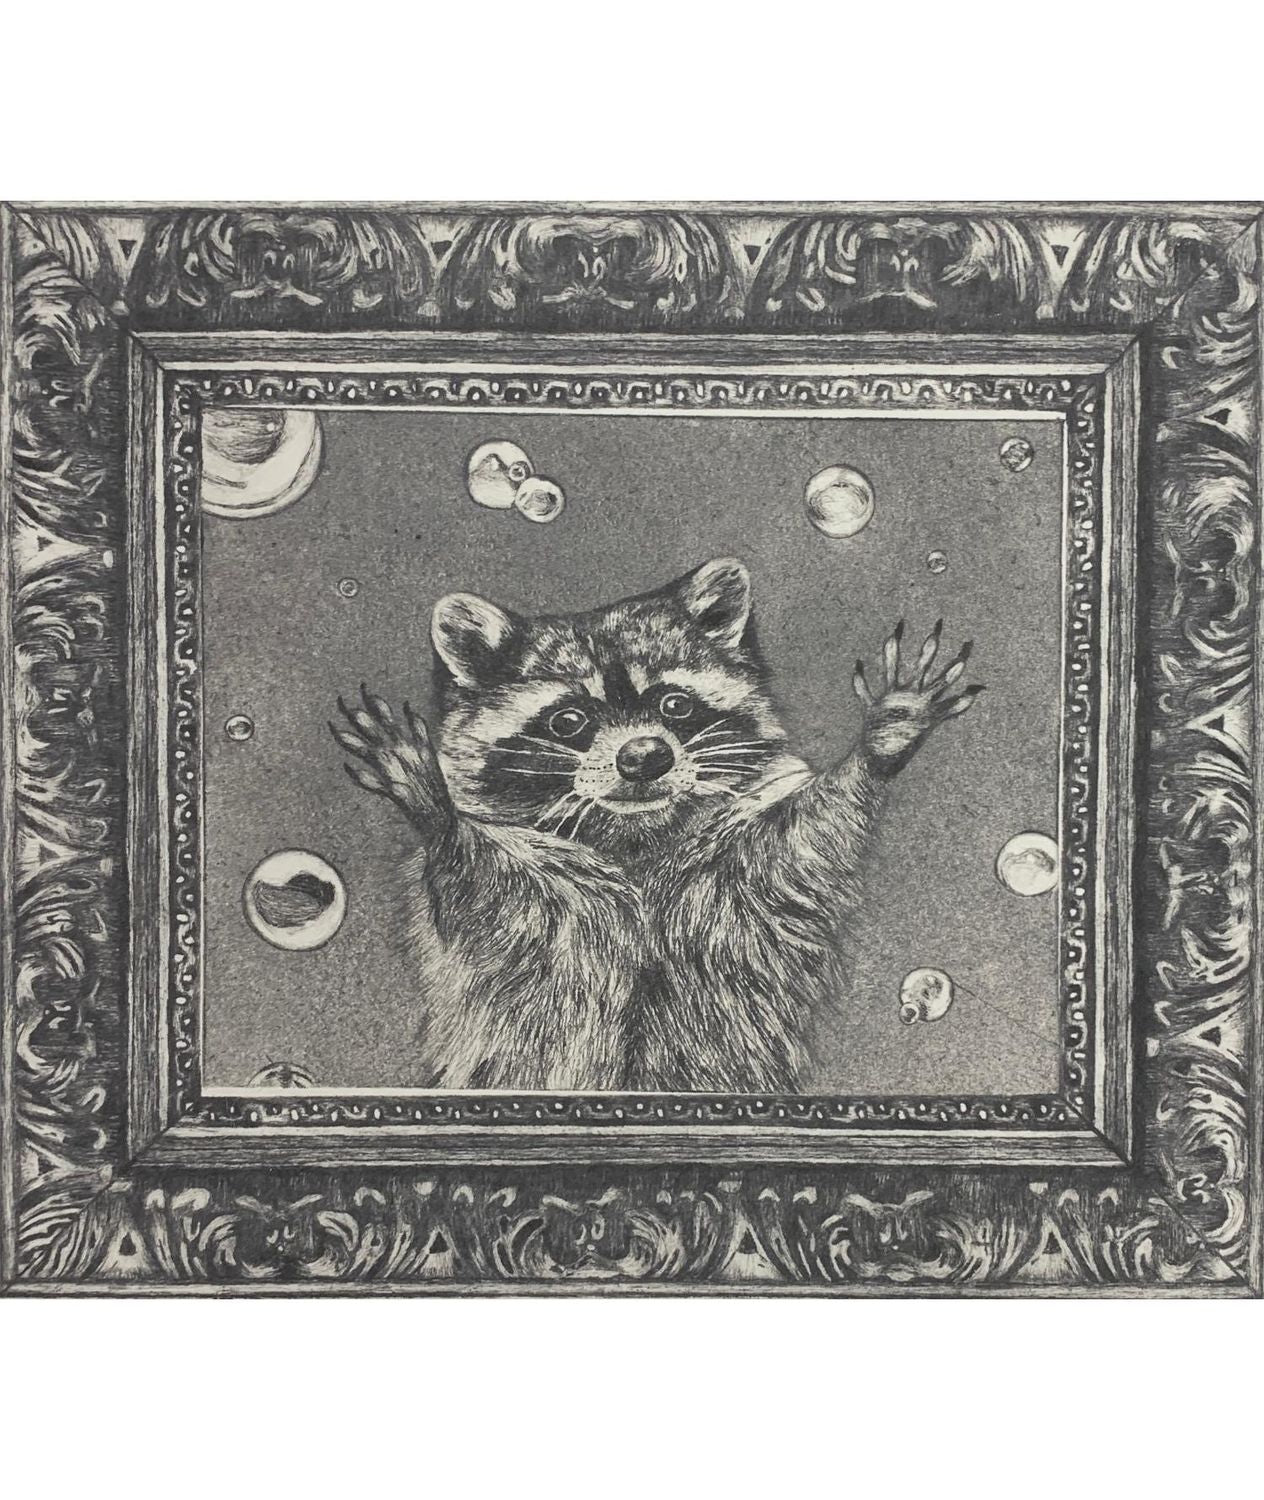 In The… (Raccoon) | Original Print by Tsubaki Scythe